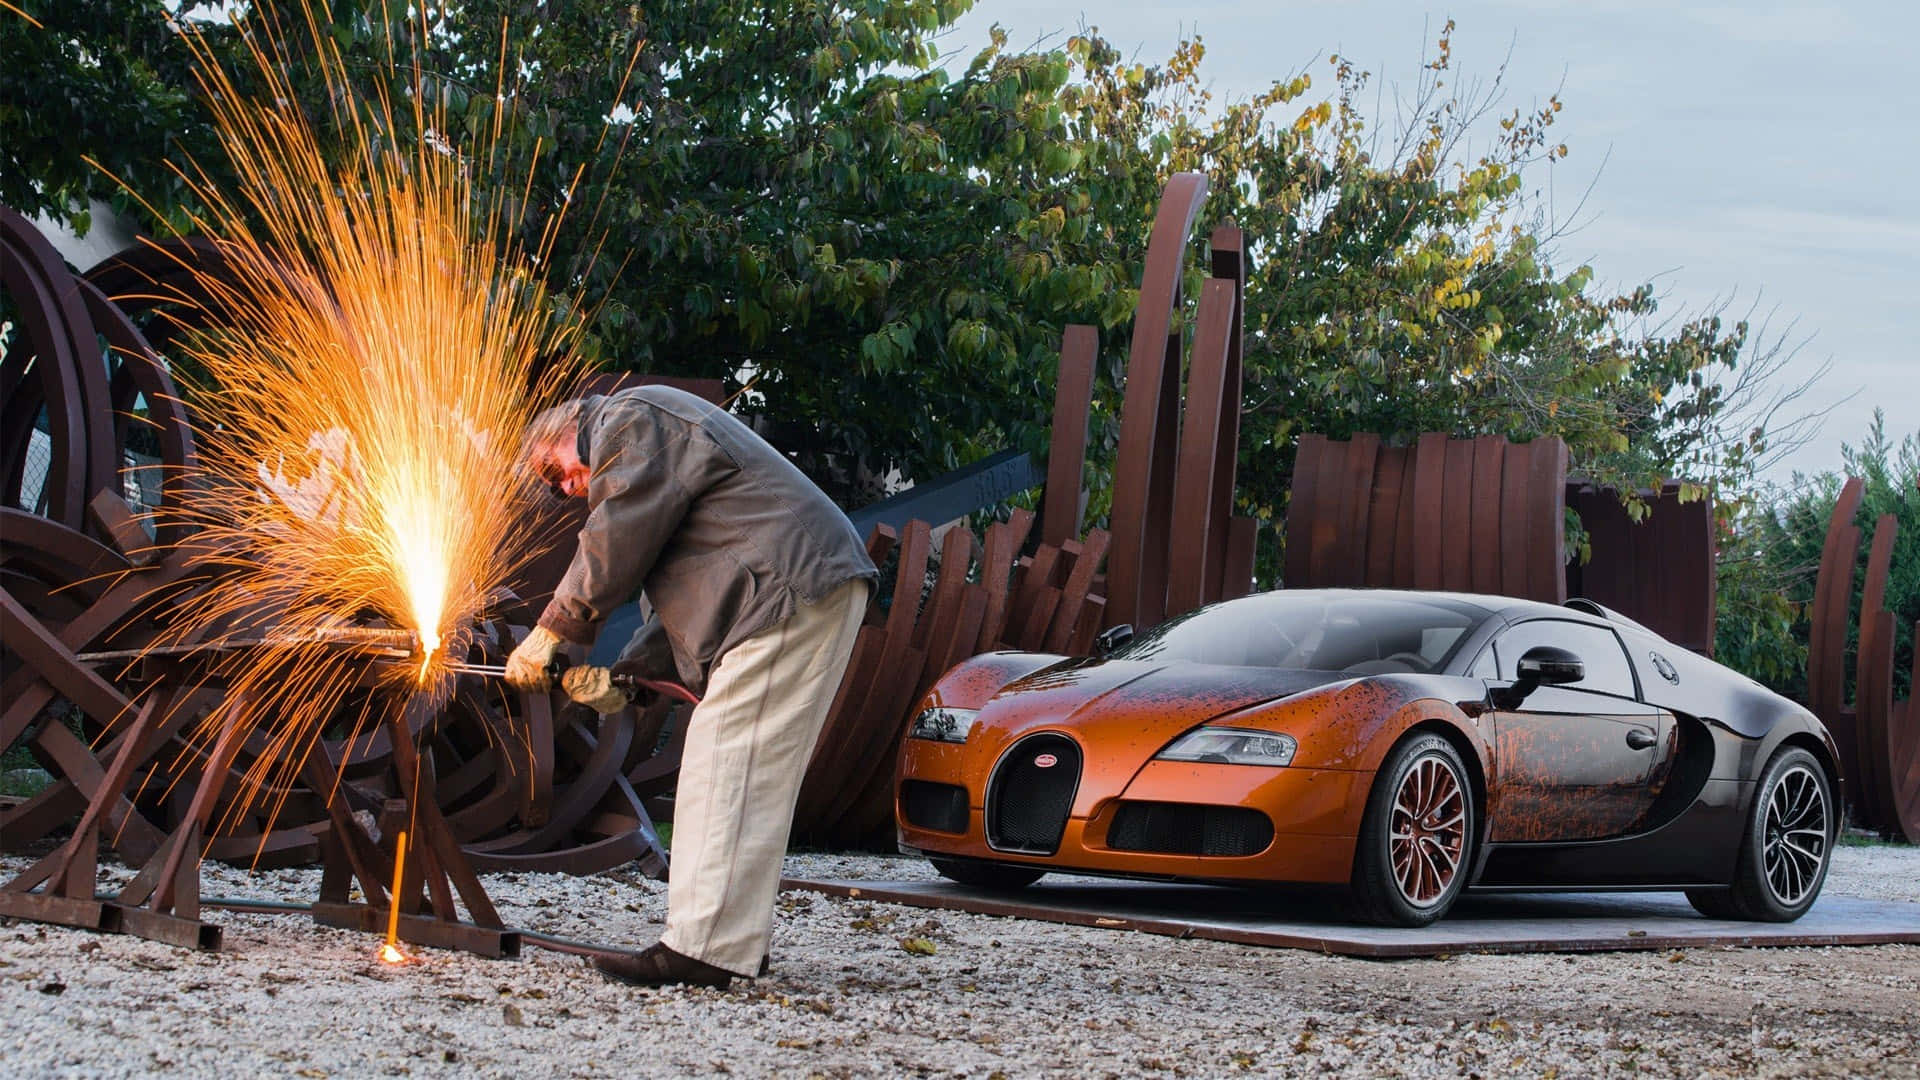 Fastest Luxury - Bugatti Veyron in Action Wallpaper